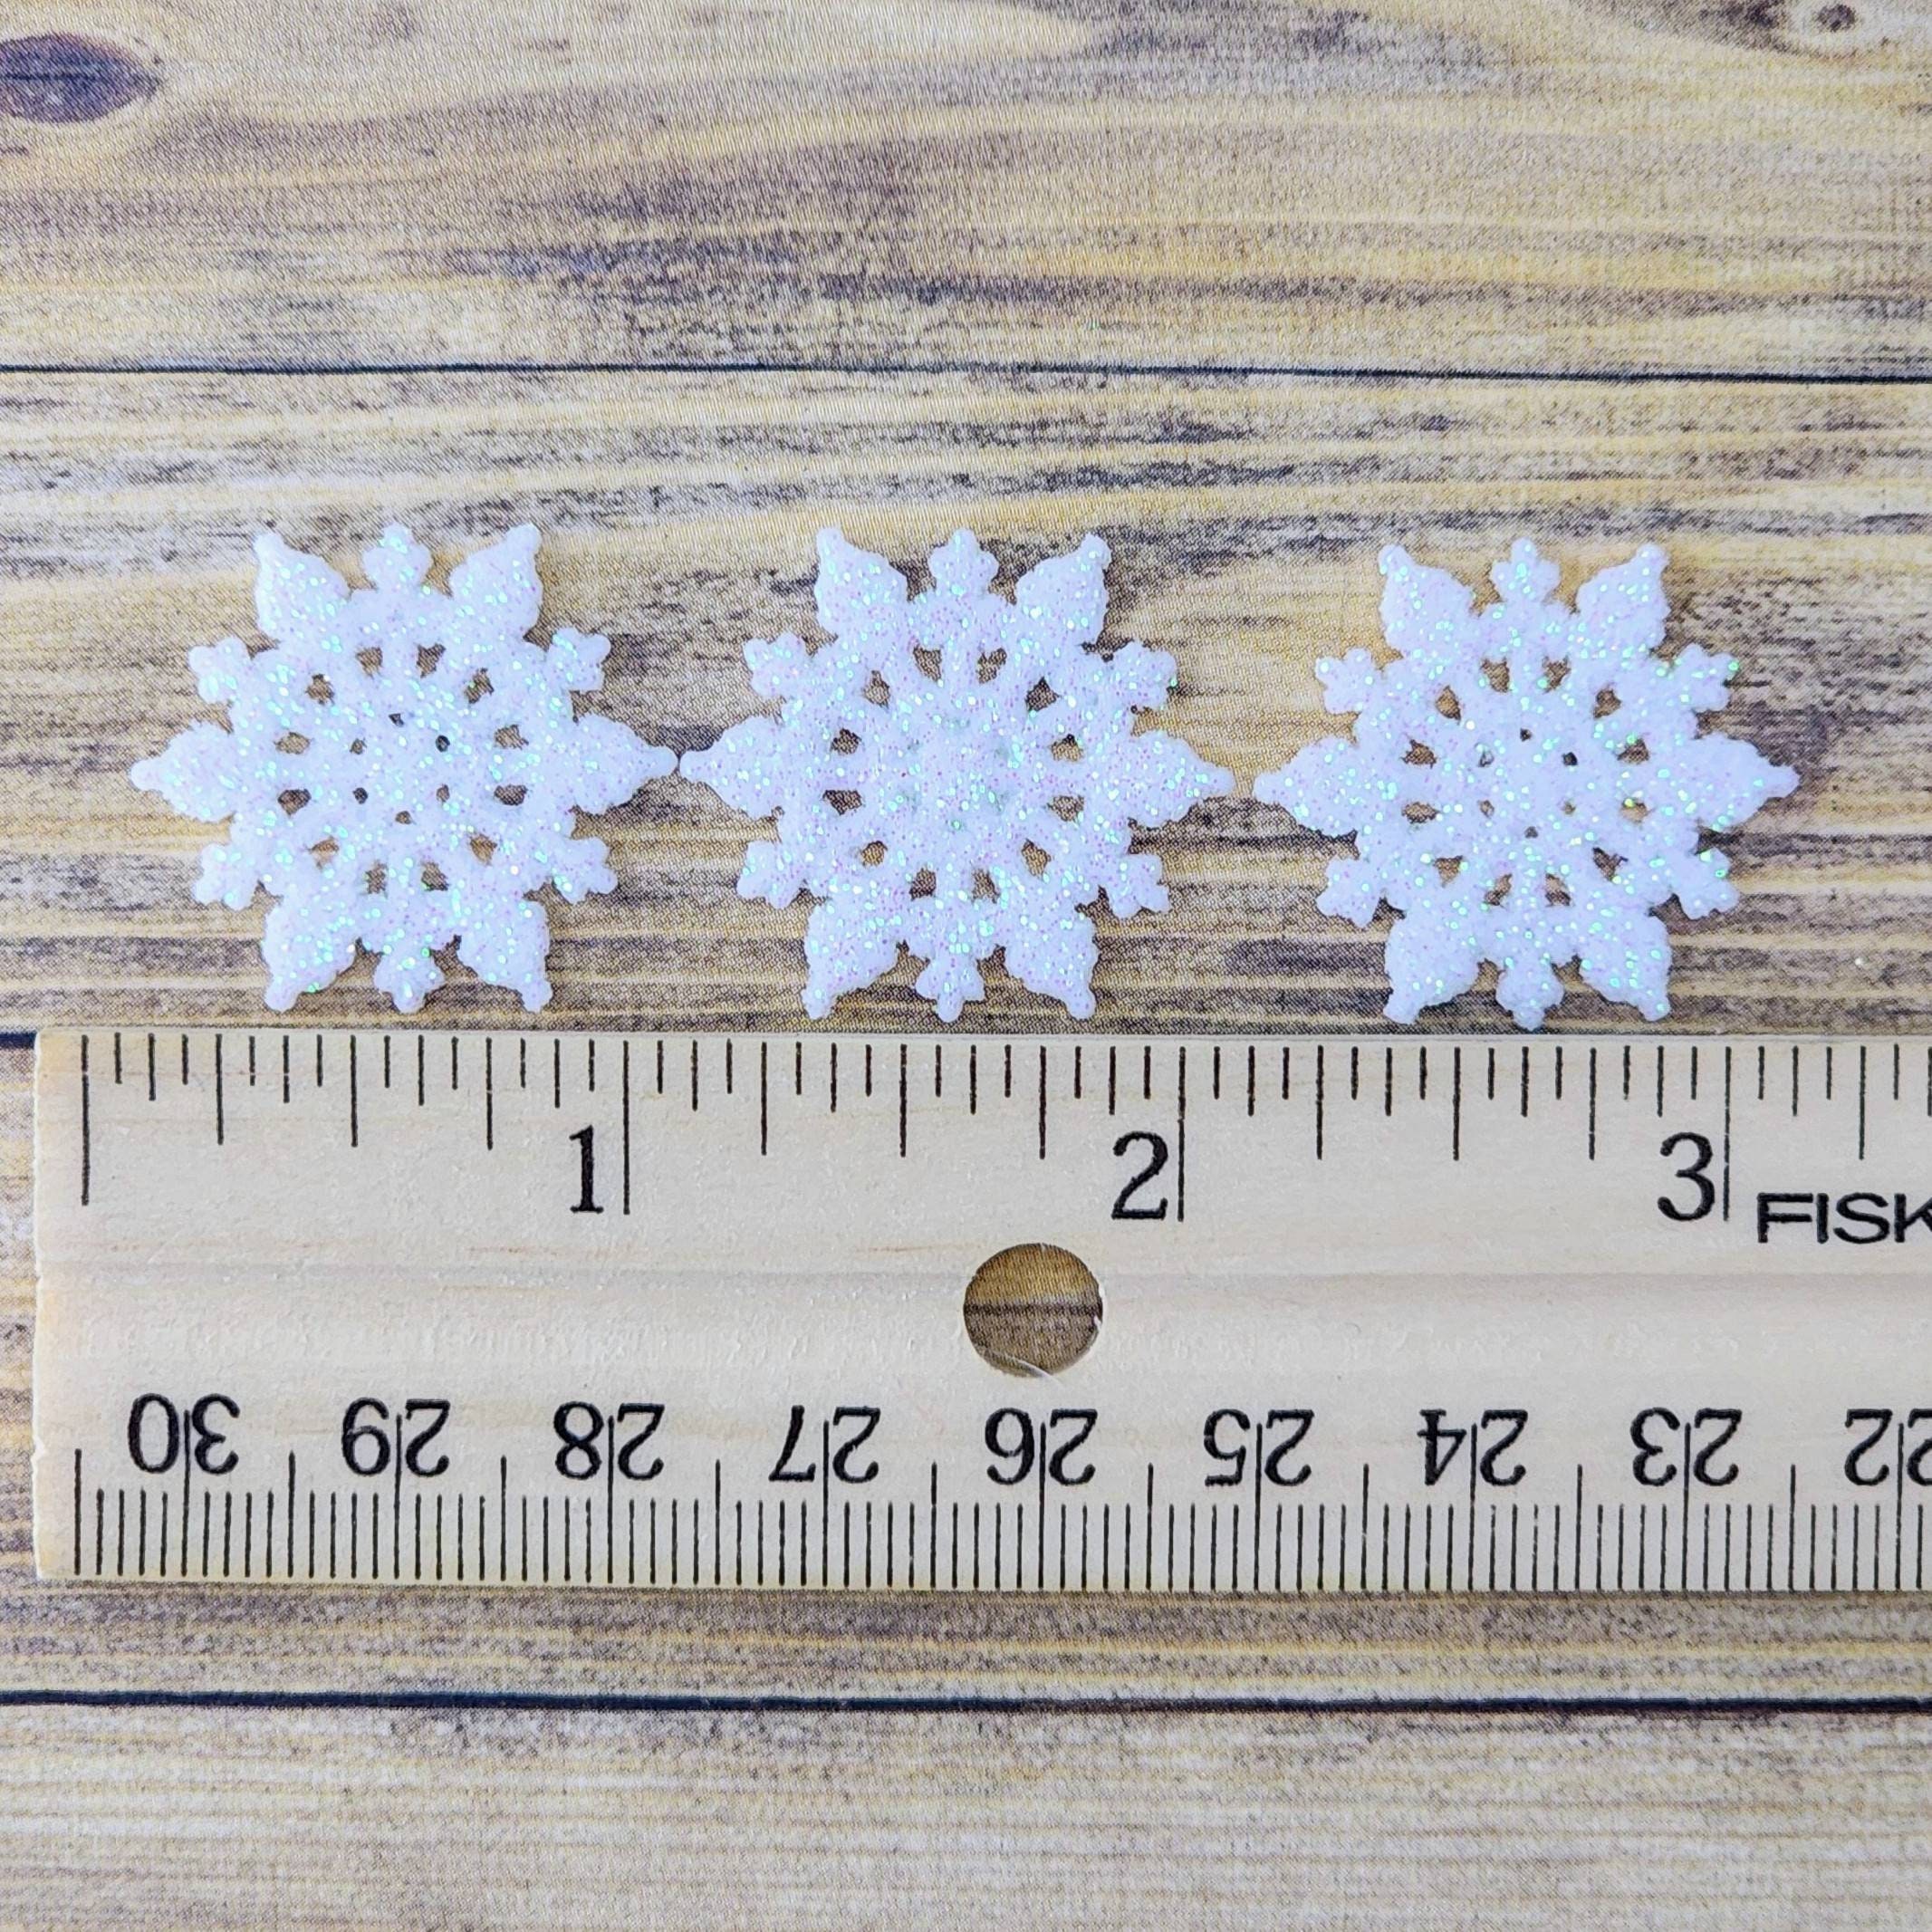 10 Clear Acrylic Snowflakes Embellishments, Miniature Snowflakes